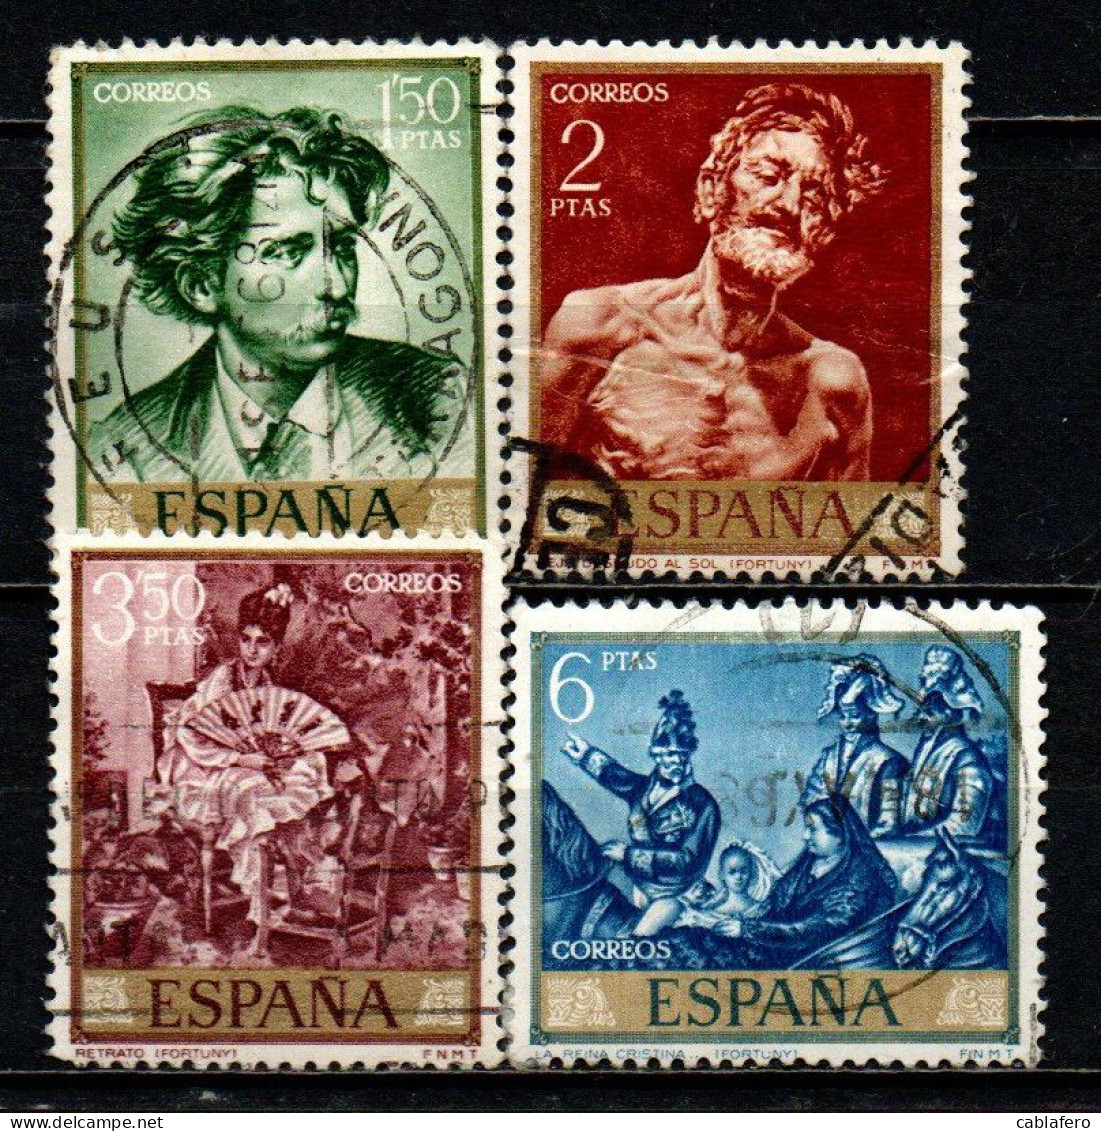 SPAGNA - 1968 - DIPINTI DI MARIANO FORTUNY MARSAL - USATI - Usati